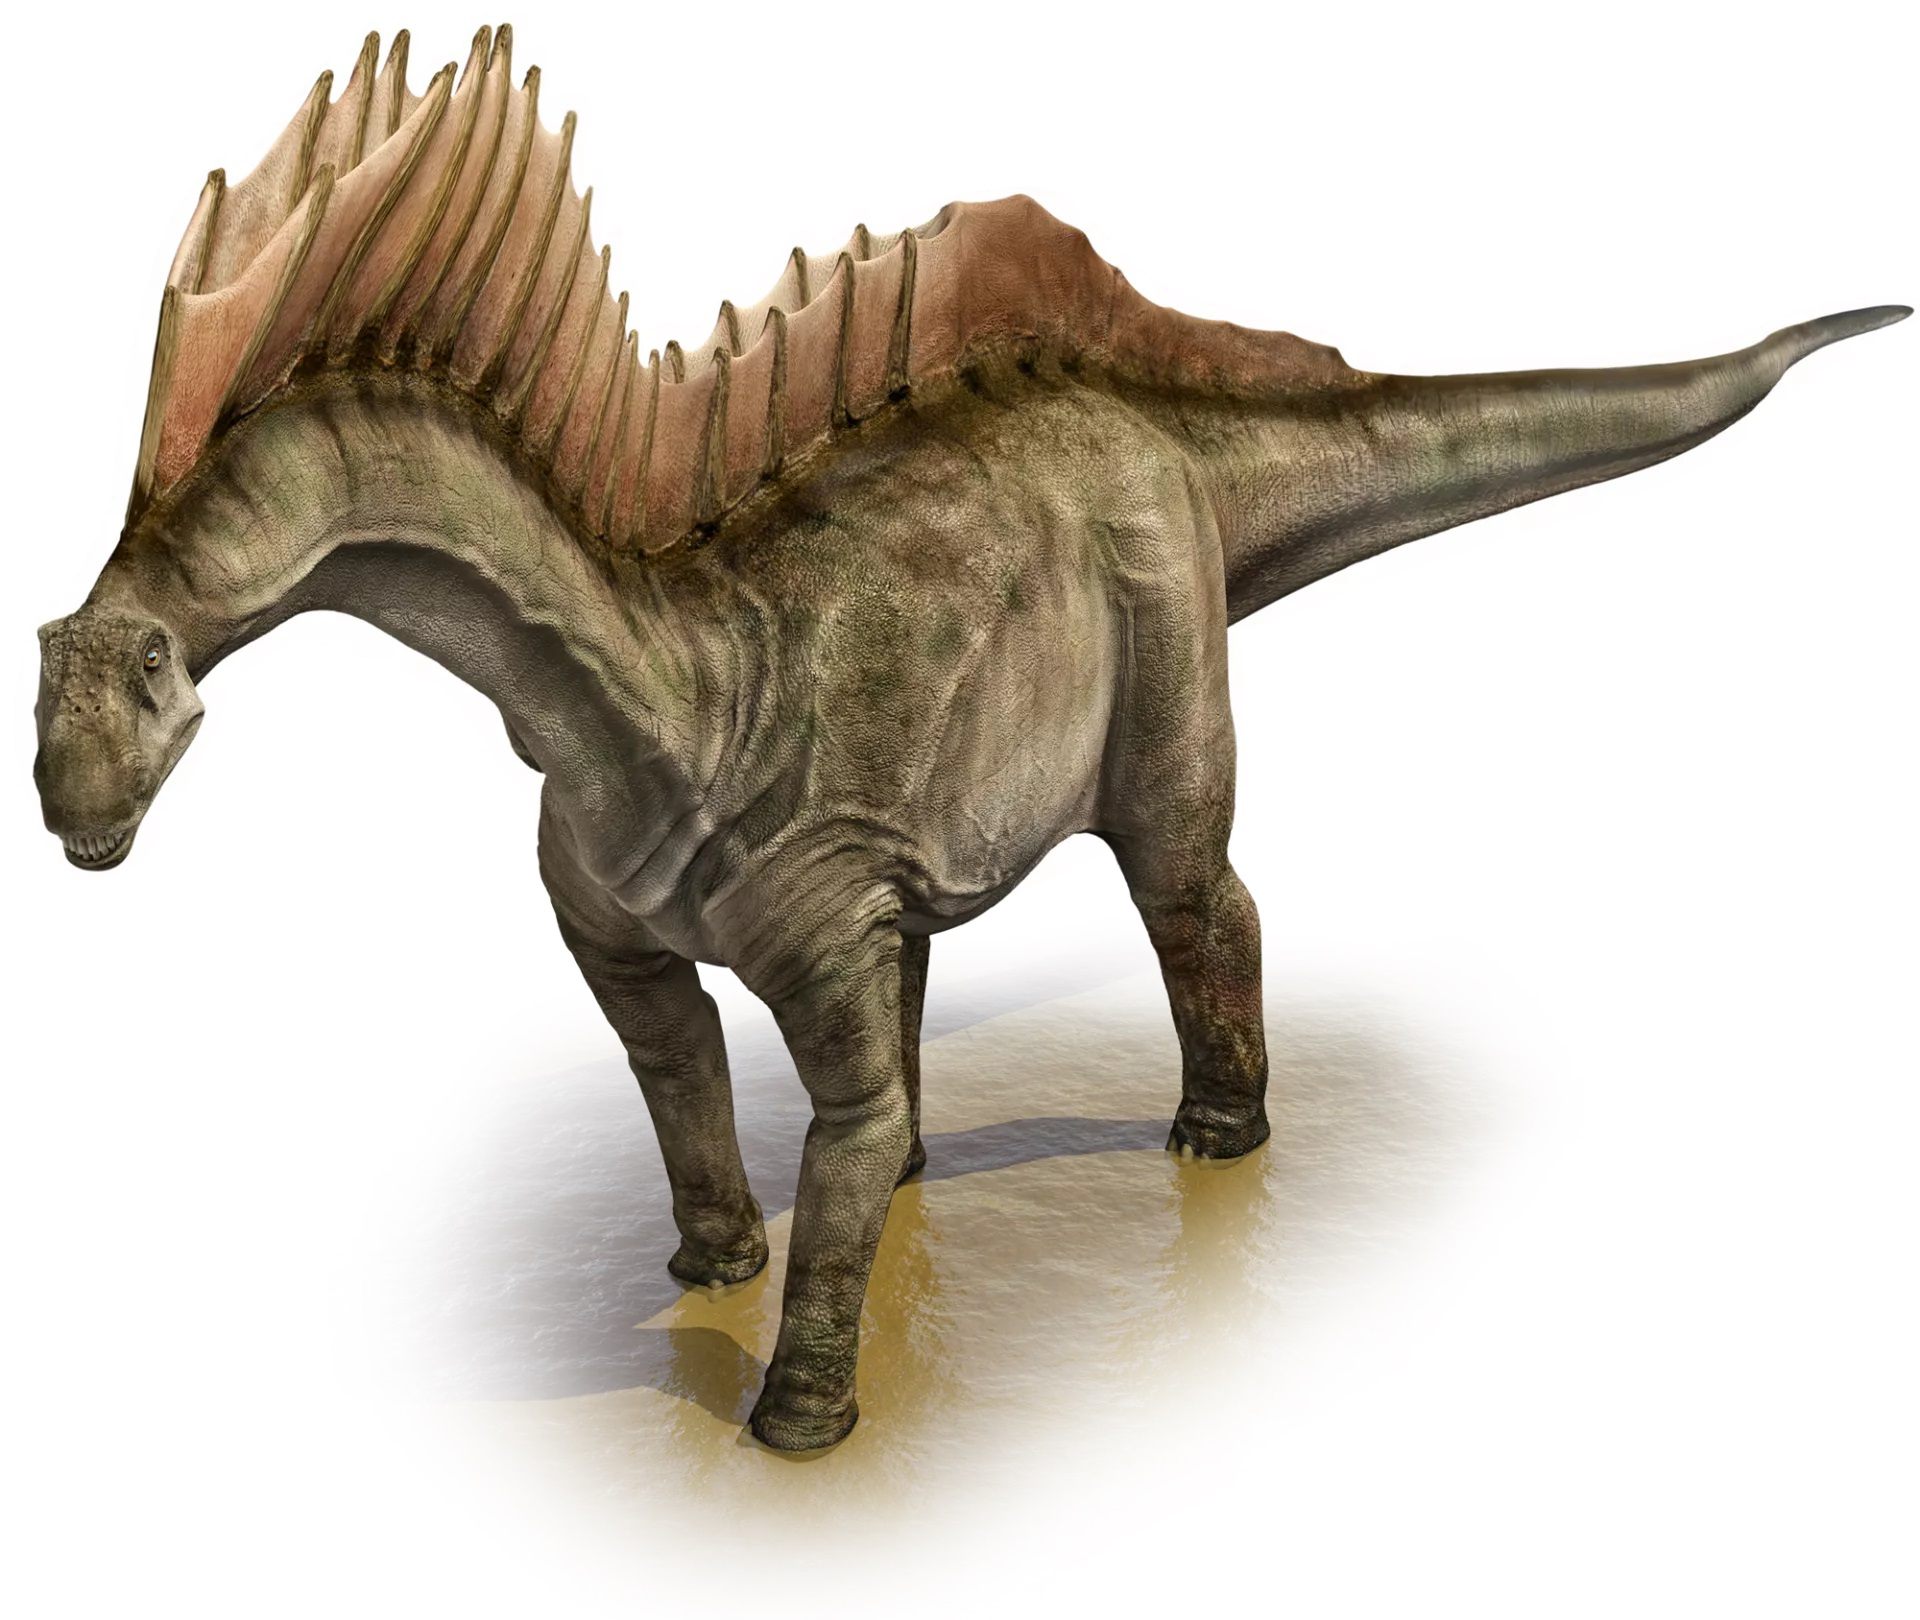 19-amargasaurus-facts